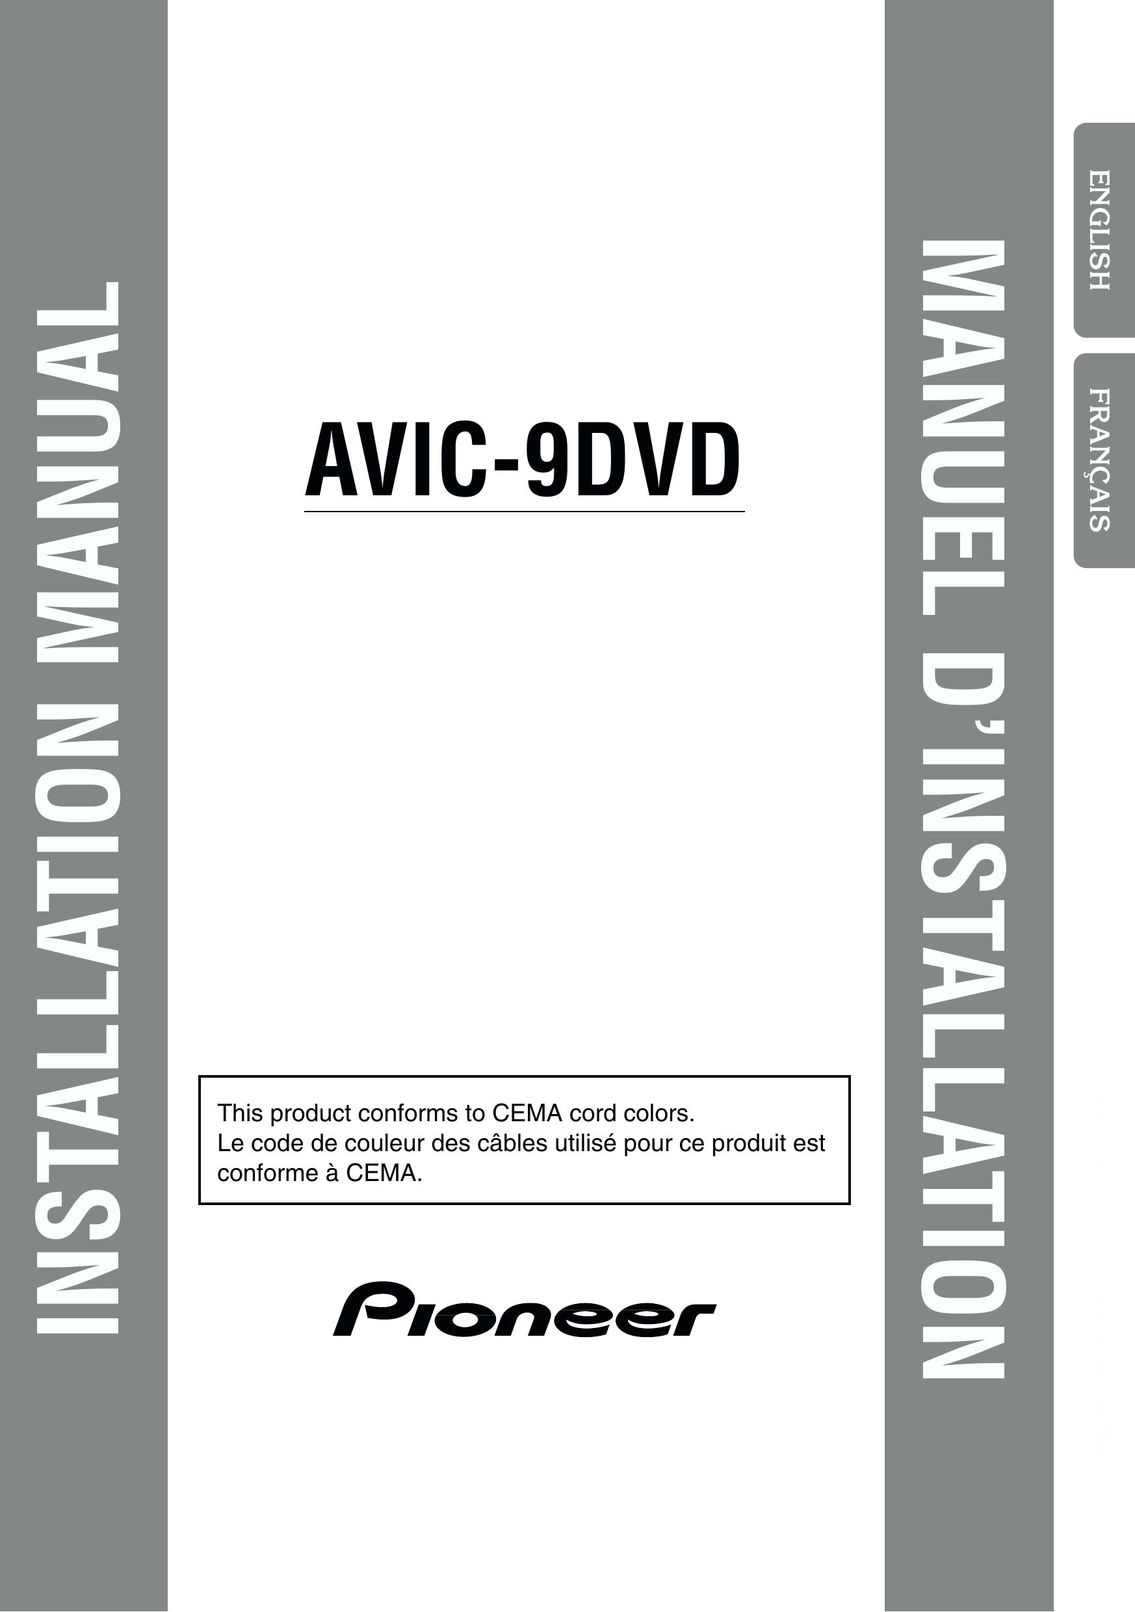 2Wire AVIC-9DVD Elliptical Trainer User Manual